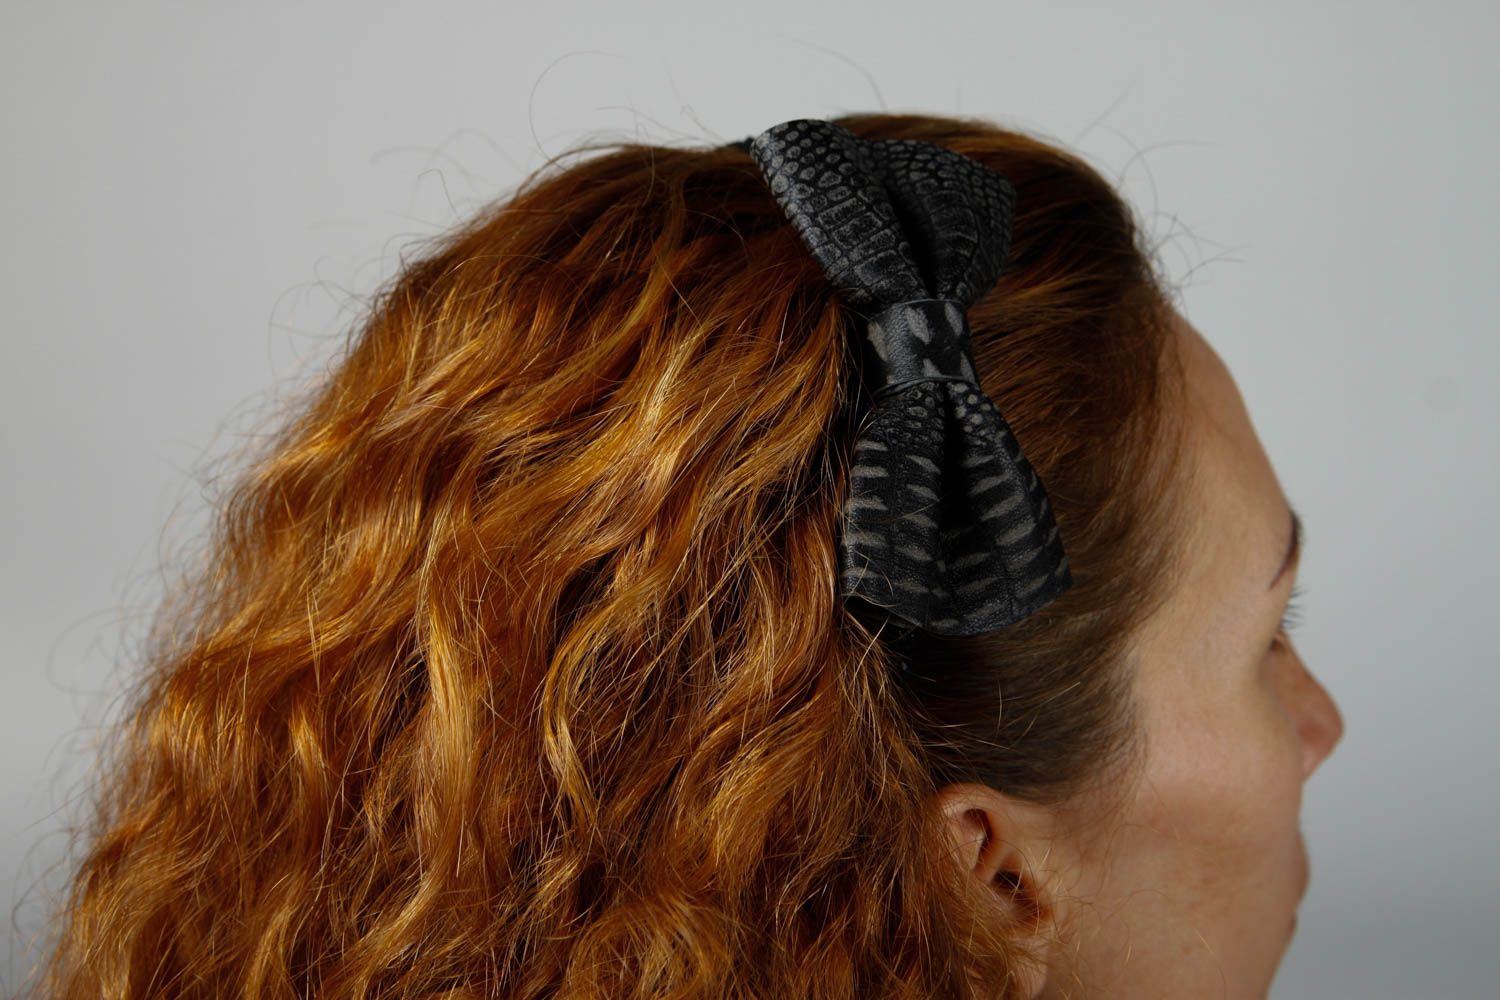 Stylish handmade headband leather hair bands leather goods flowers in hair photo 2